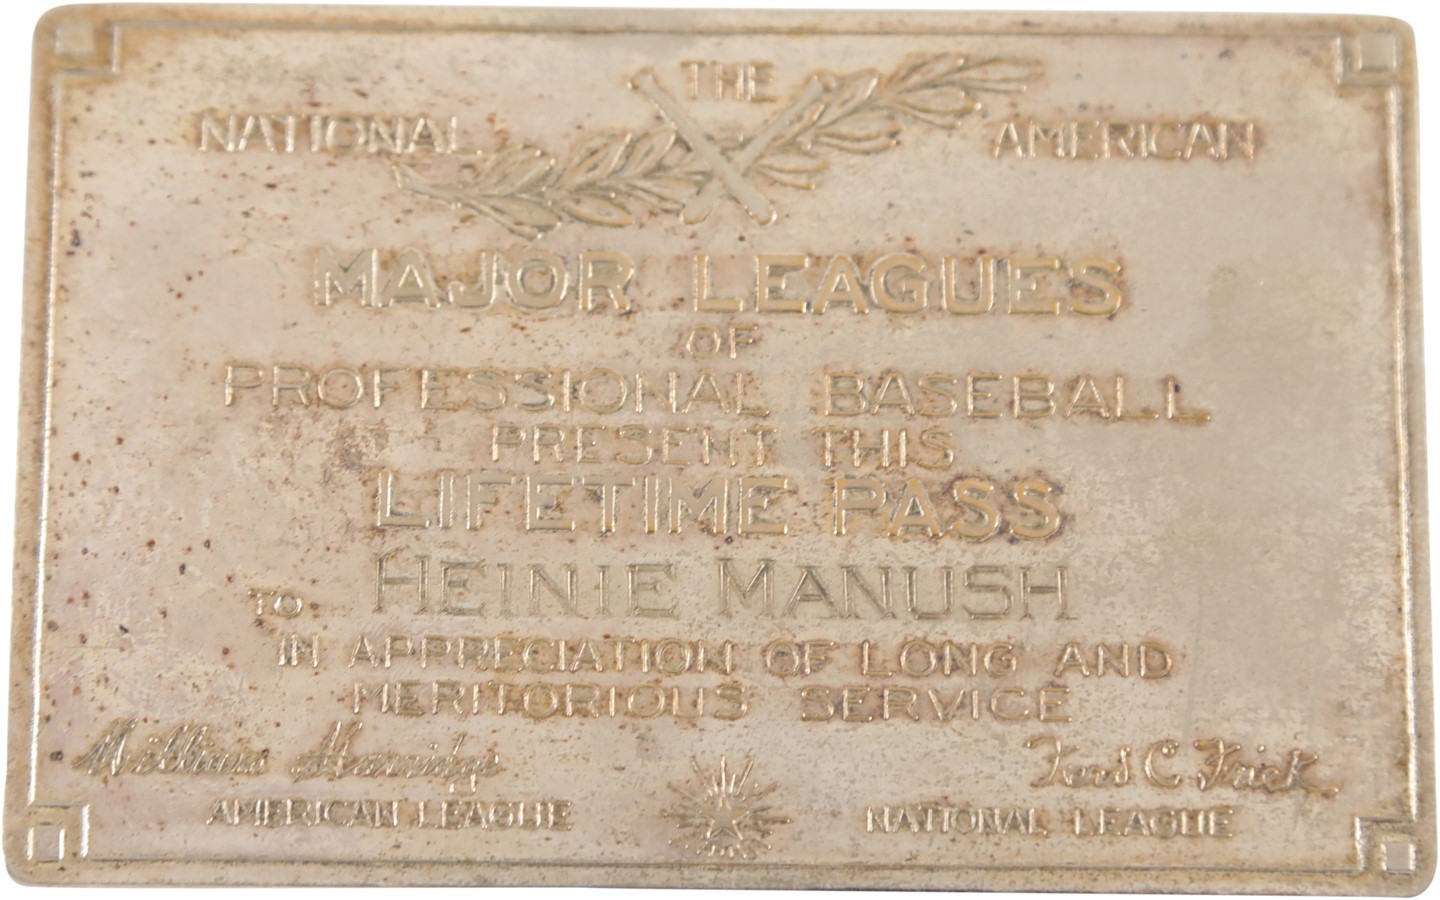 - Heinie Manush Major Leagues Lifetime "Silver" Pass